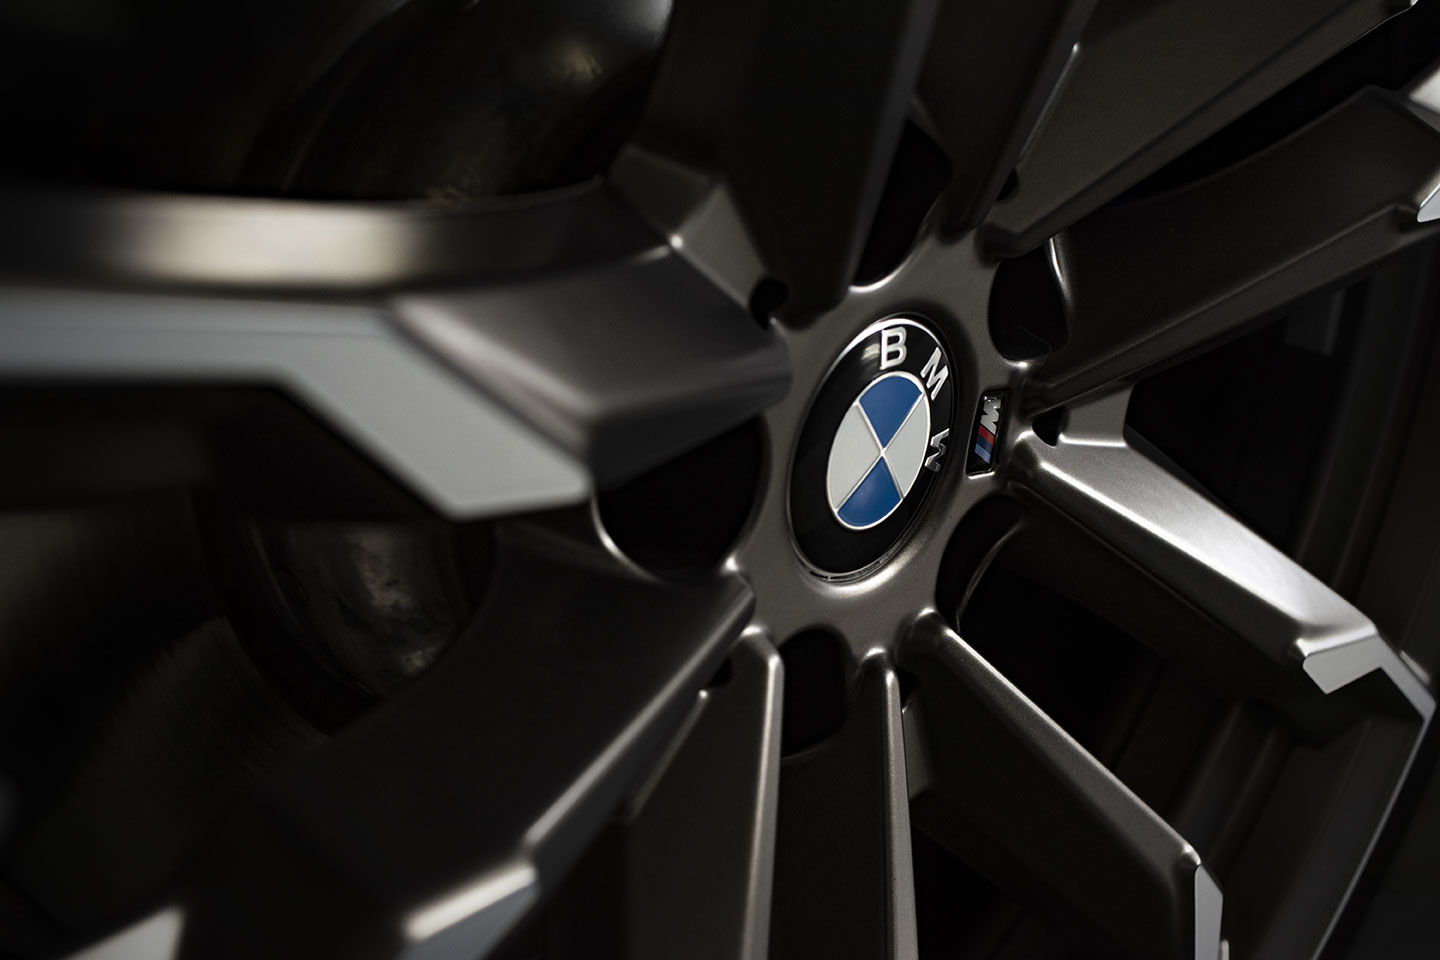 BMW M6 macroscopic photograph